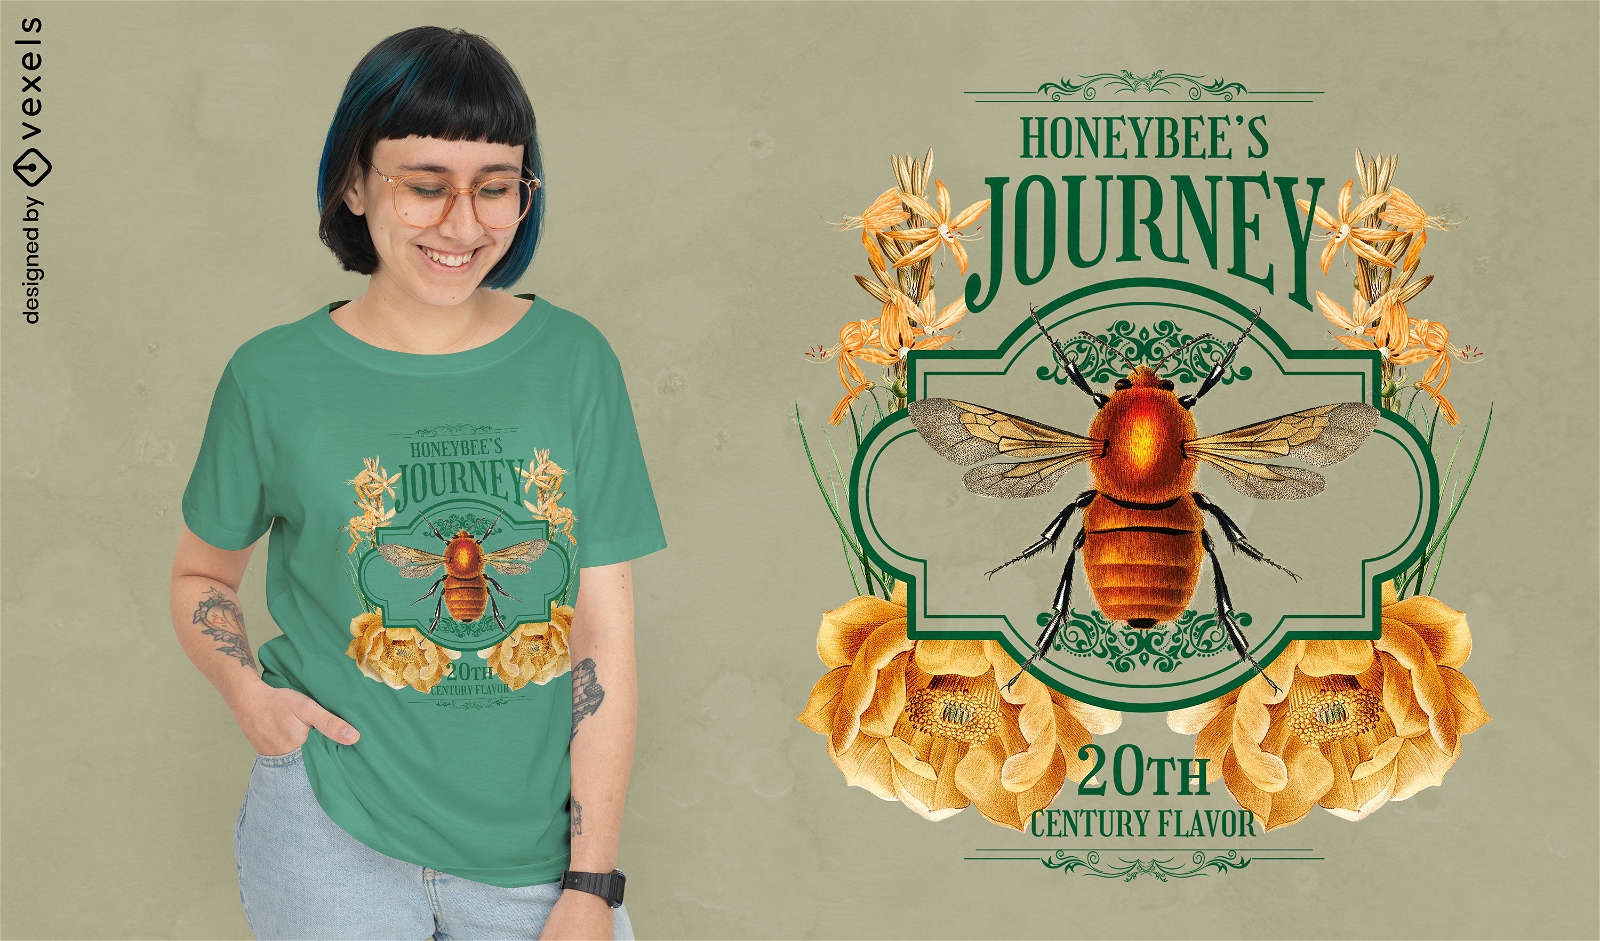 Bees honey t-shirt design